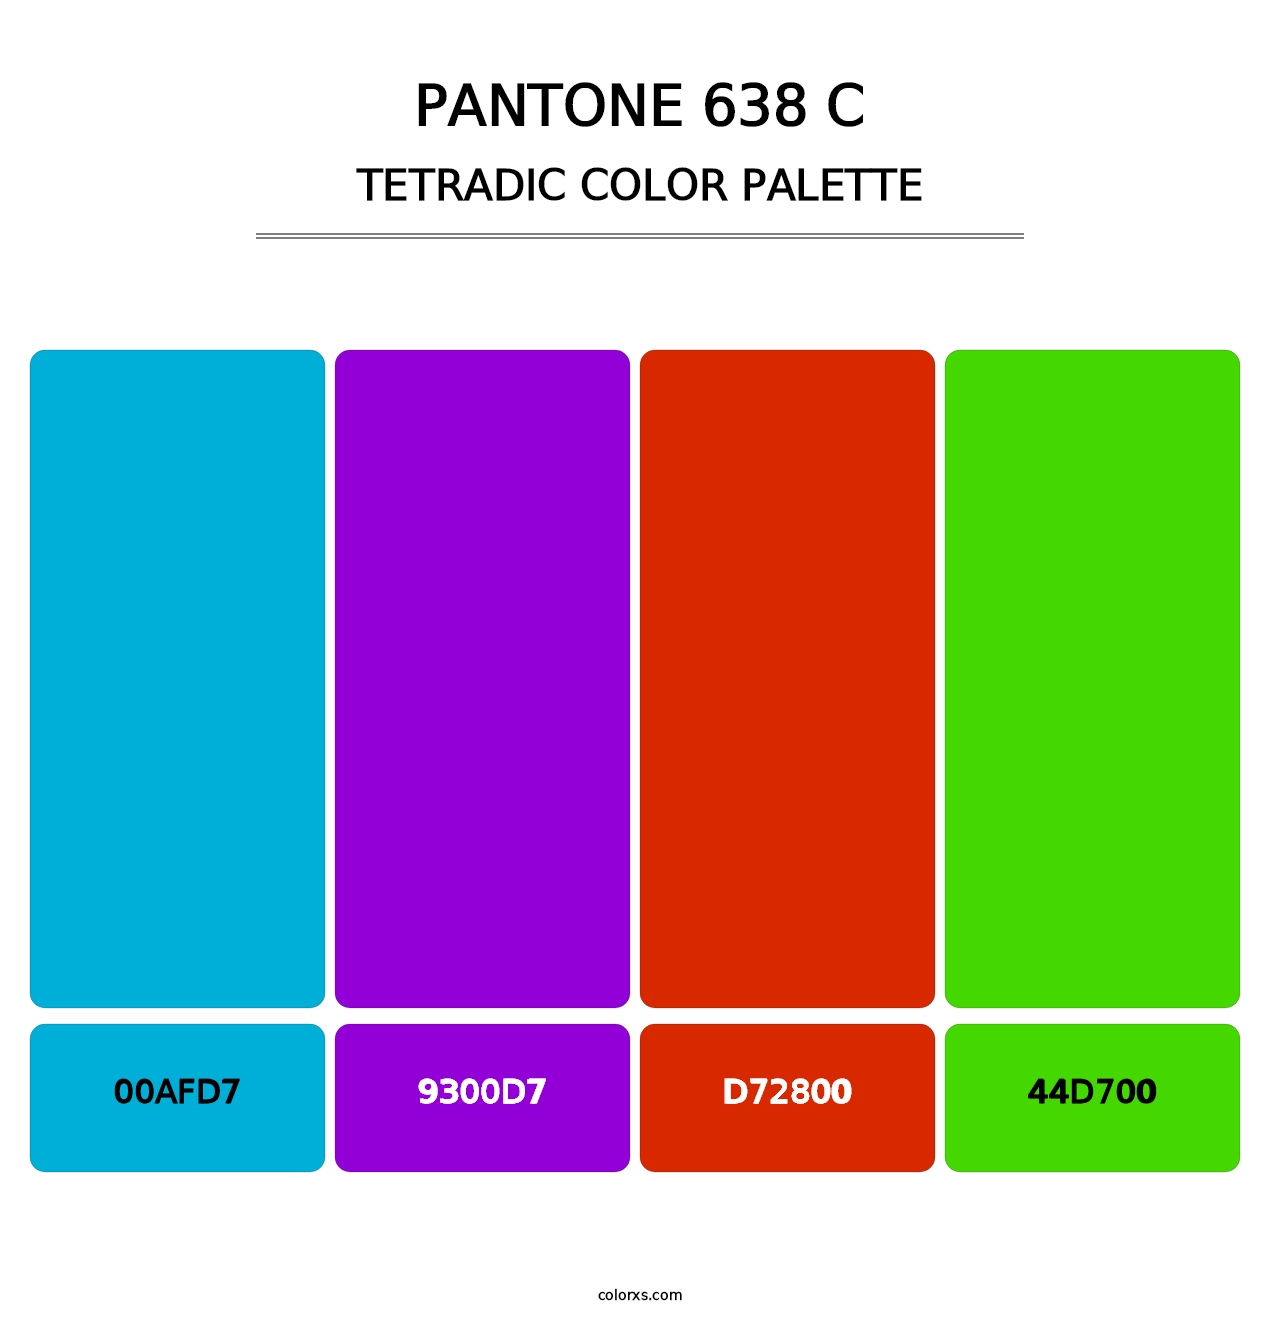 PANTONE 638 C - Tetradic Color Palette